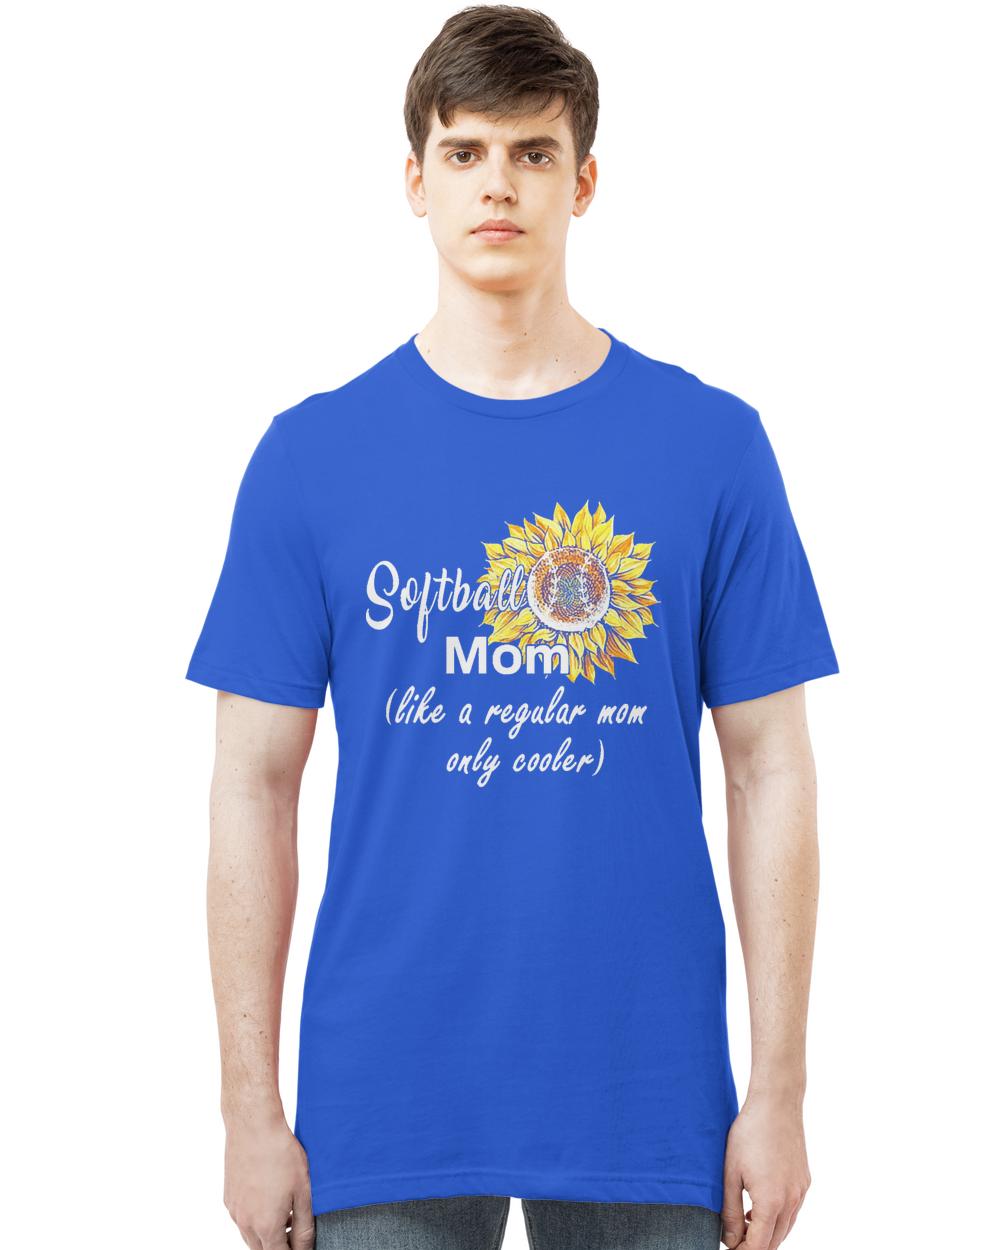 Softball Mom T- Shirt Softball Mom Like A Regular Mom Only Cooler T- Shirt